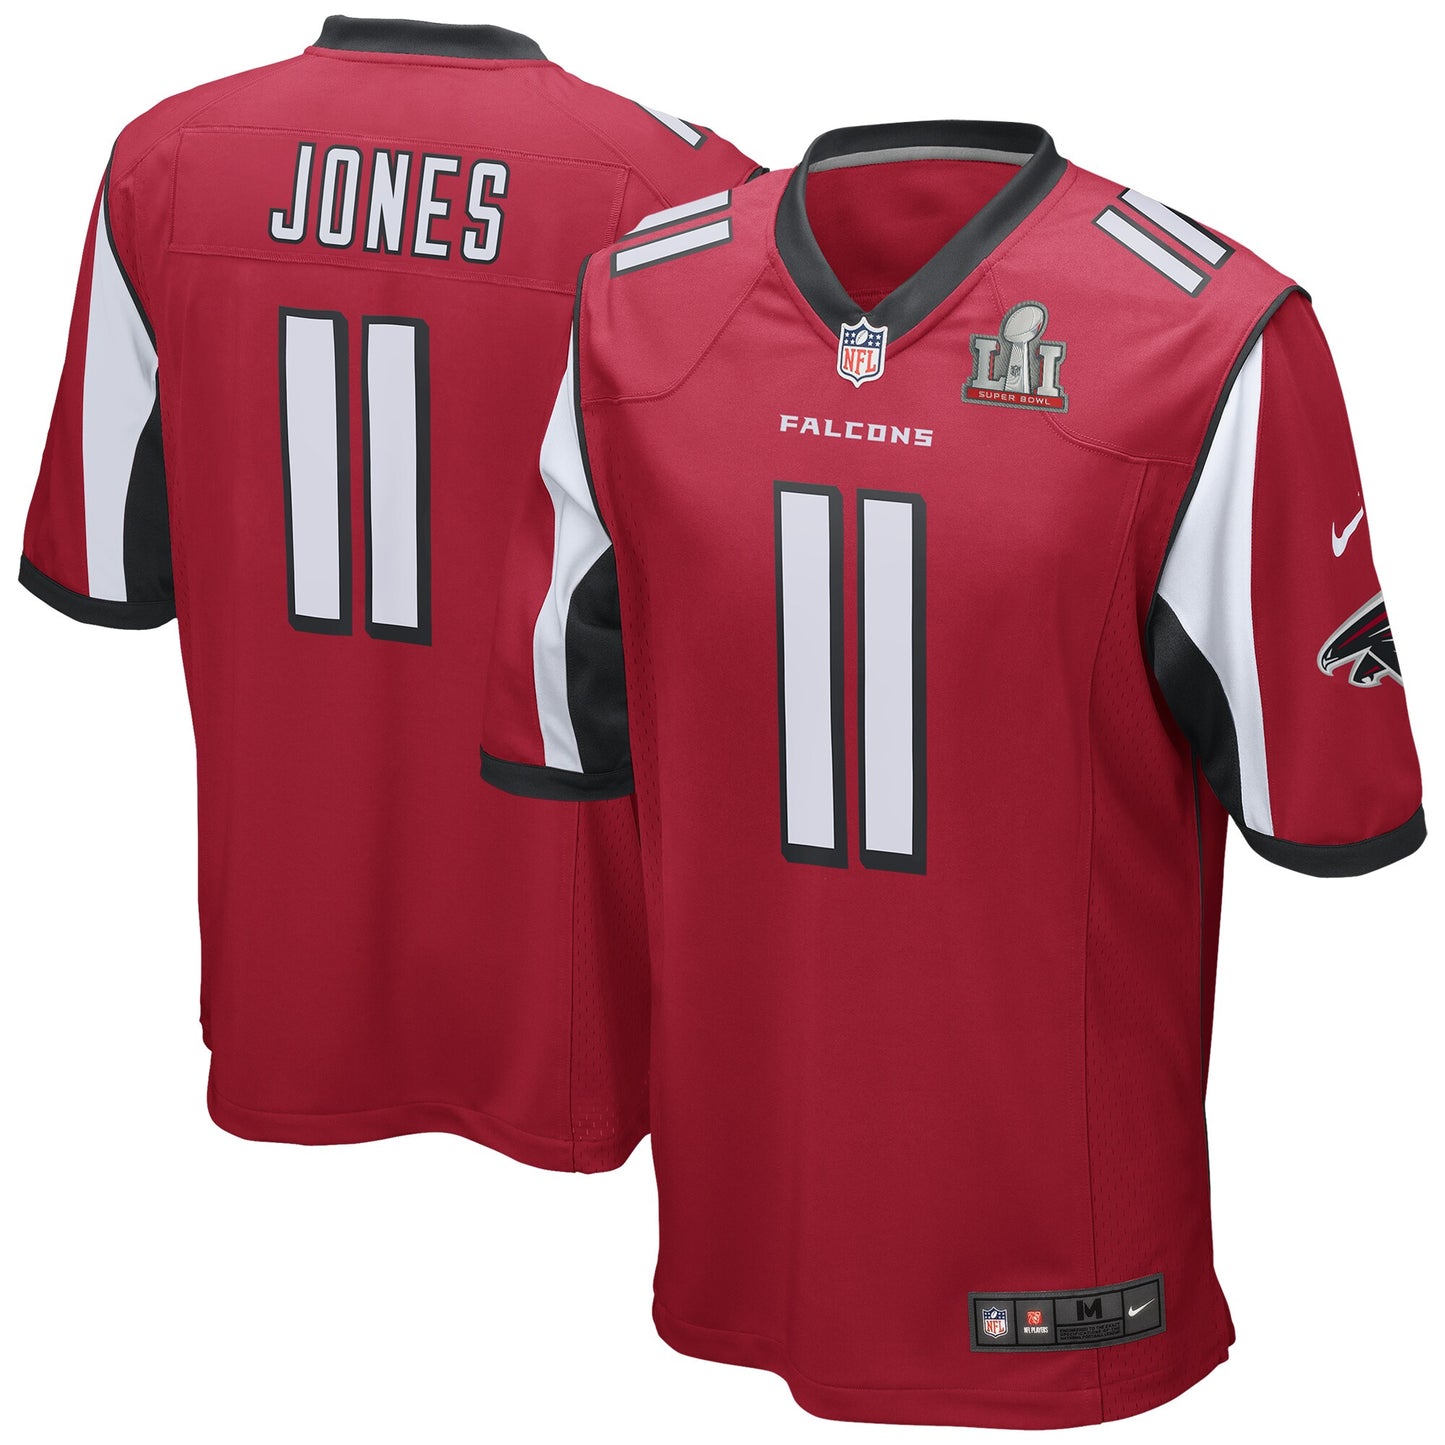 Julio Jones Atlanta Falcons Nike Youth Super Bowl LI Bound Game Jersey - Red